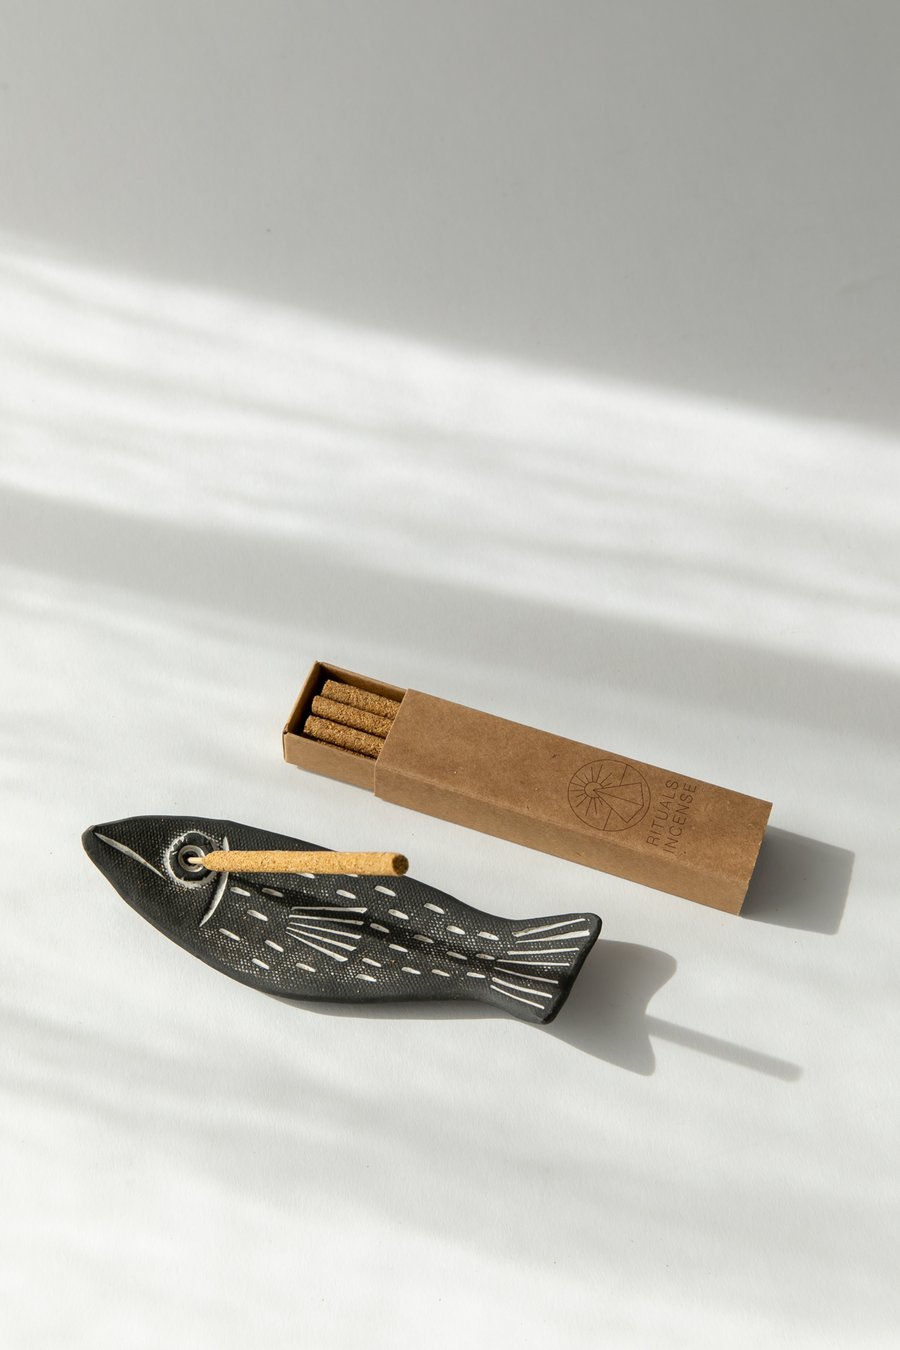 Image of Mini Charcoal Fish Incense Holder